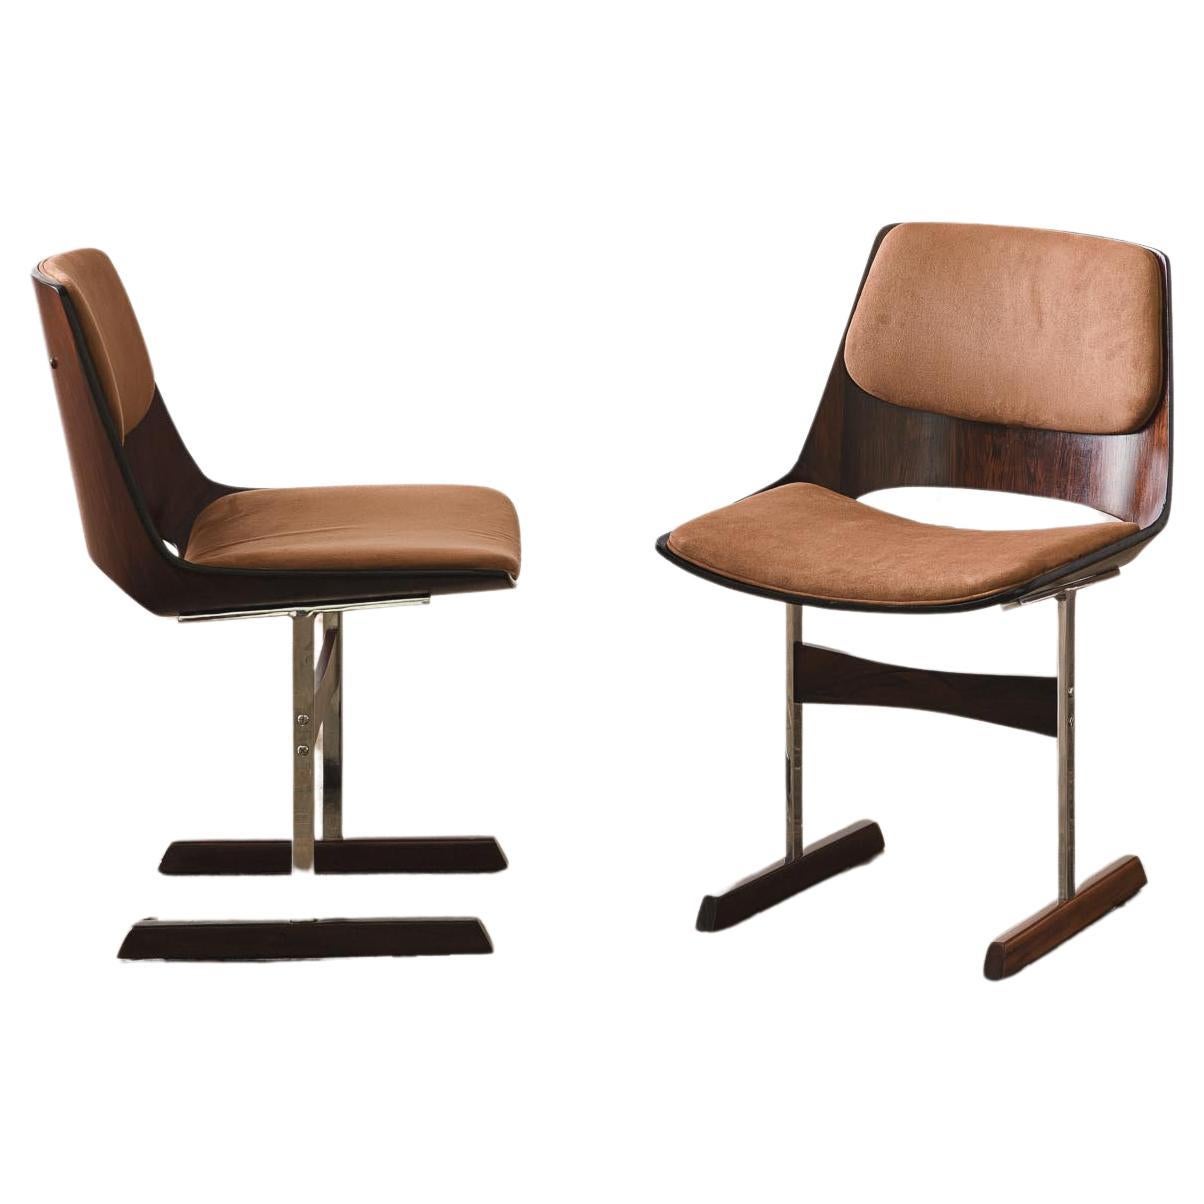 "Marina" chairs by Jorge Zalszupin For Sale